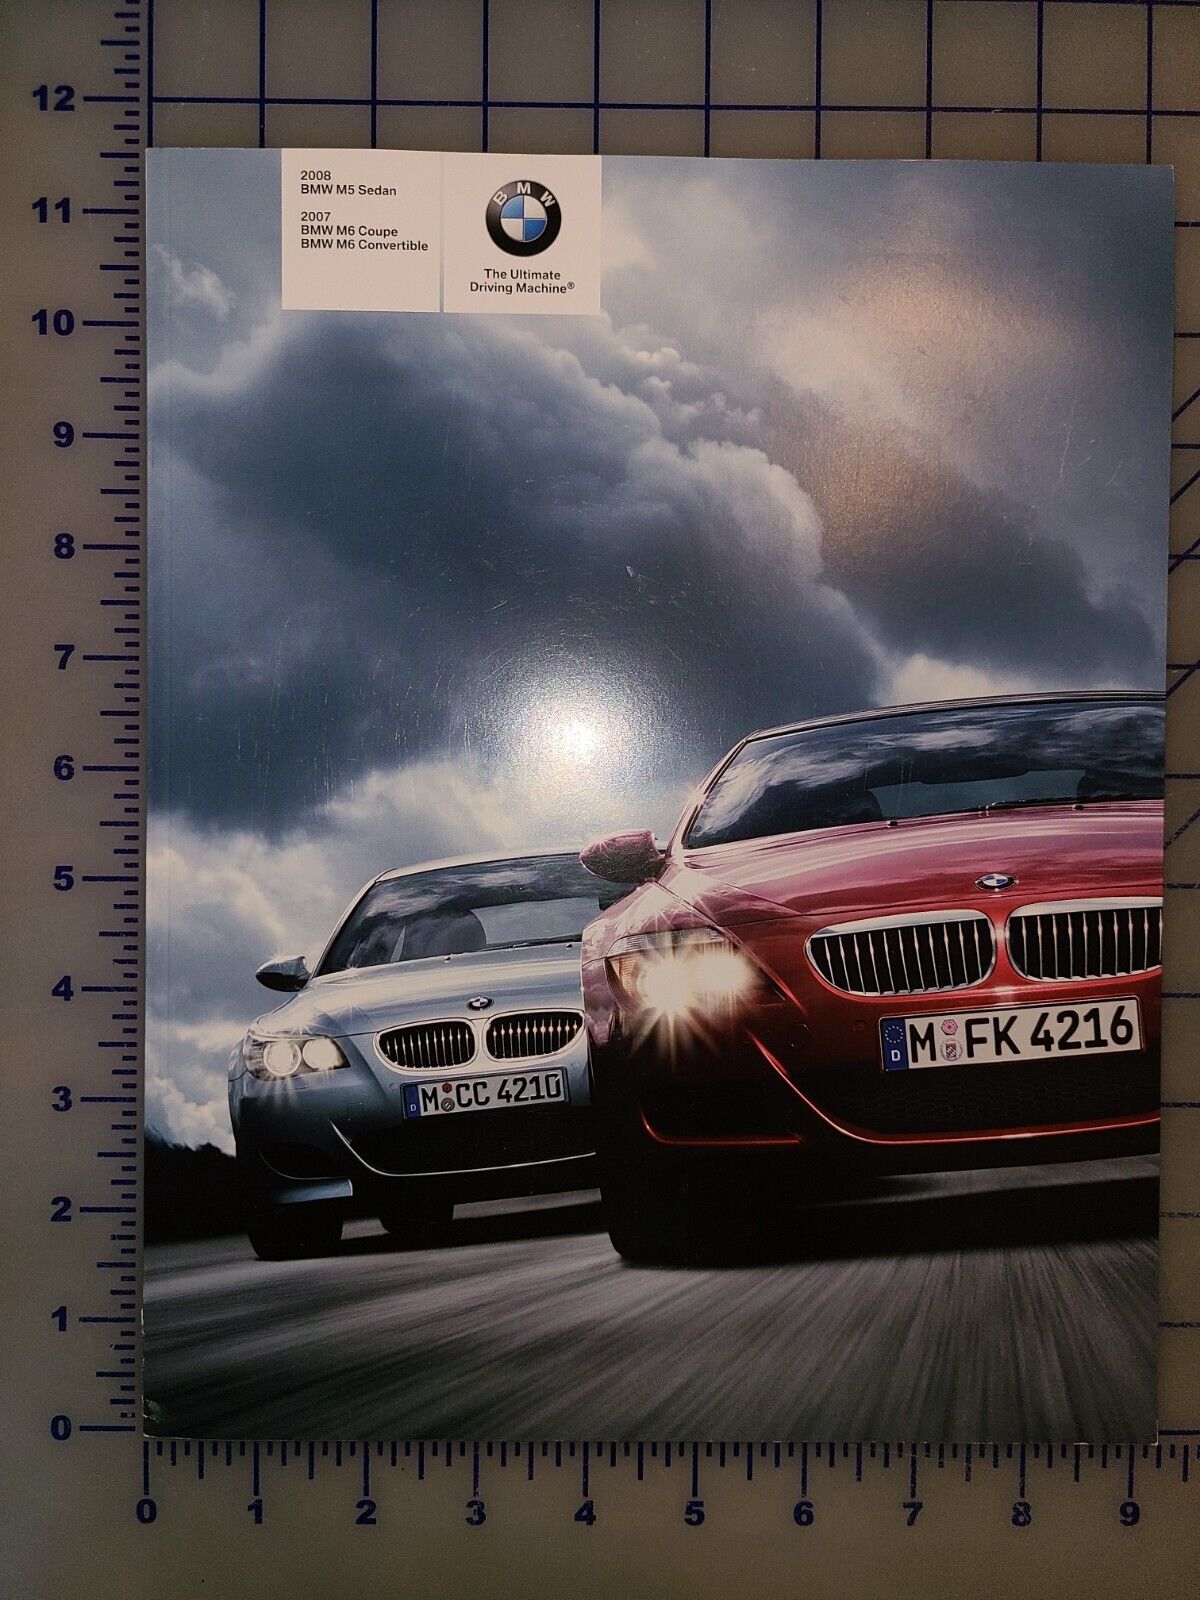 2008 BMW M5 Sedan 2007 M6 Coupe Convertible Brochure